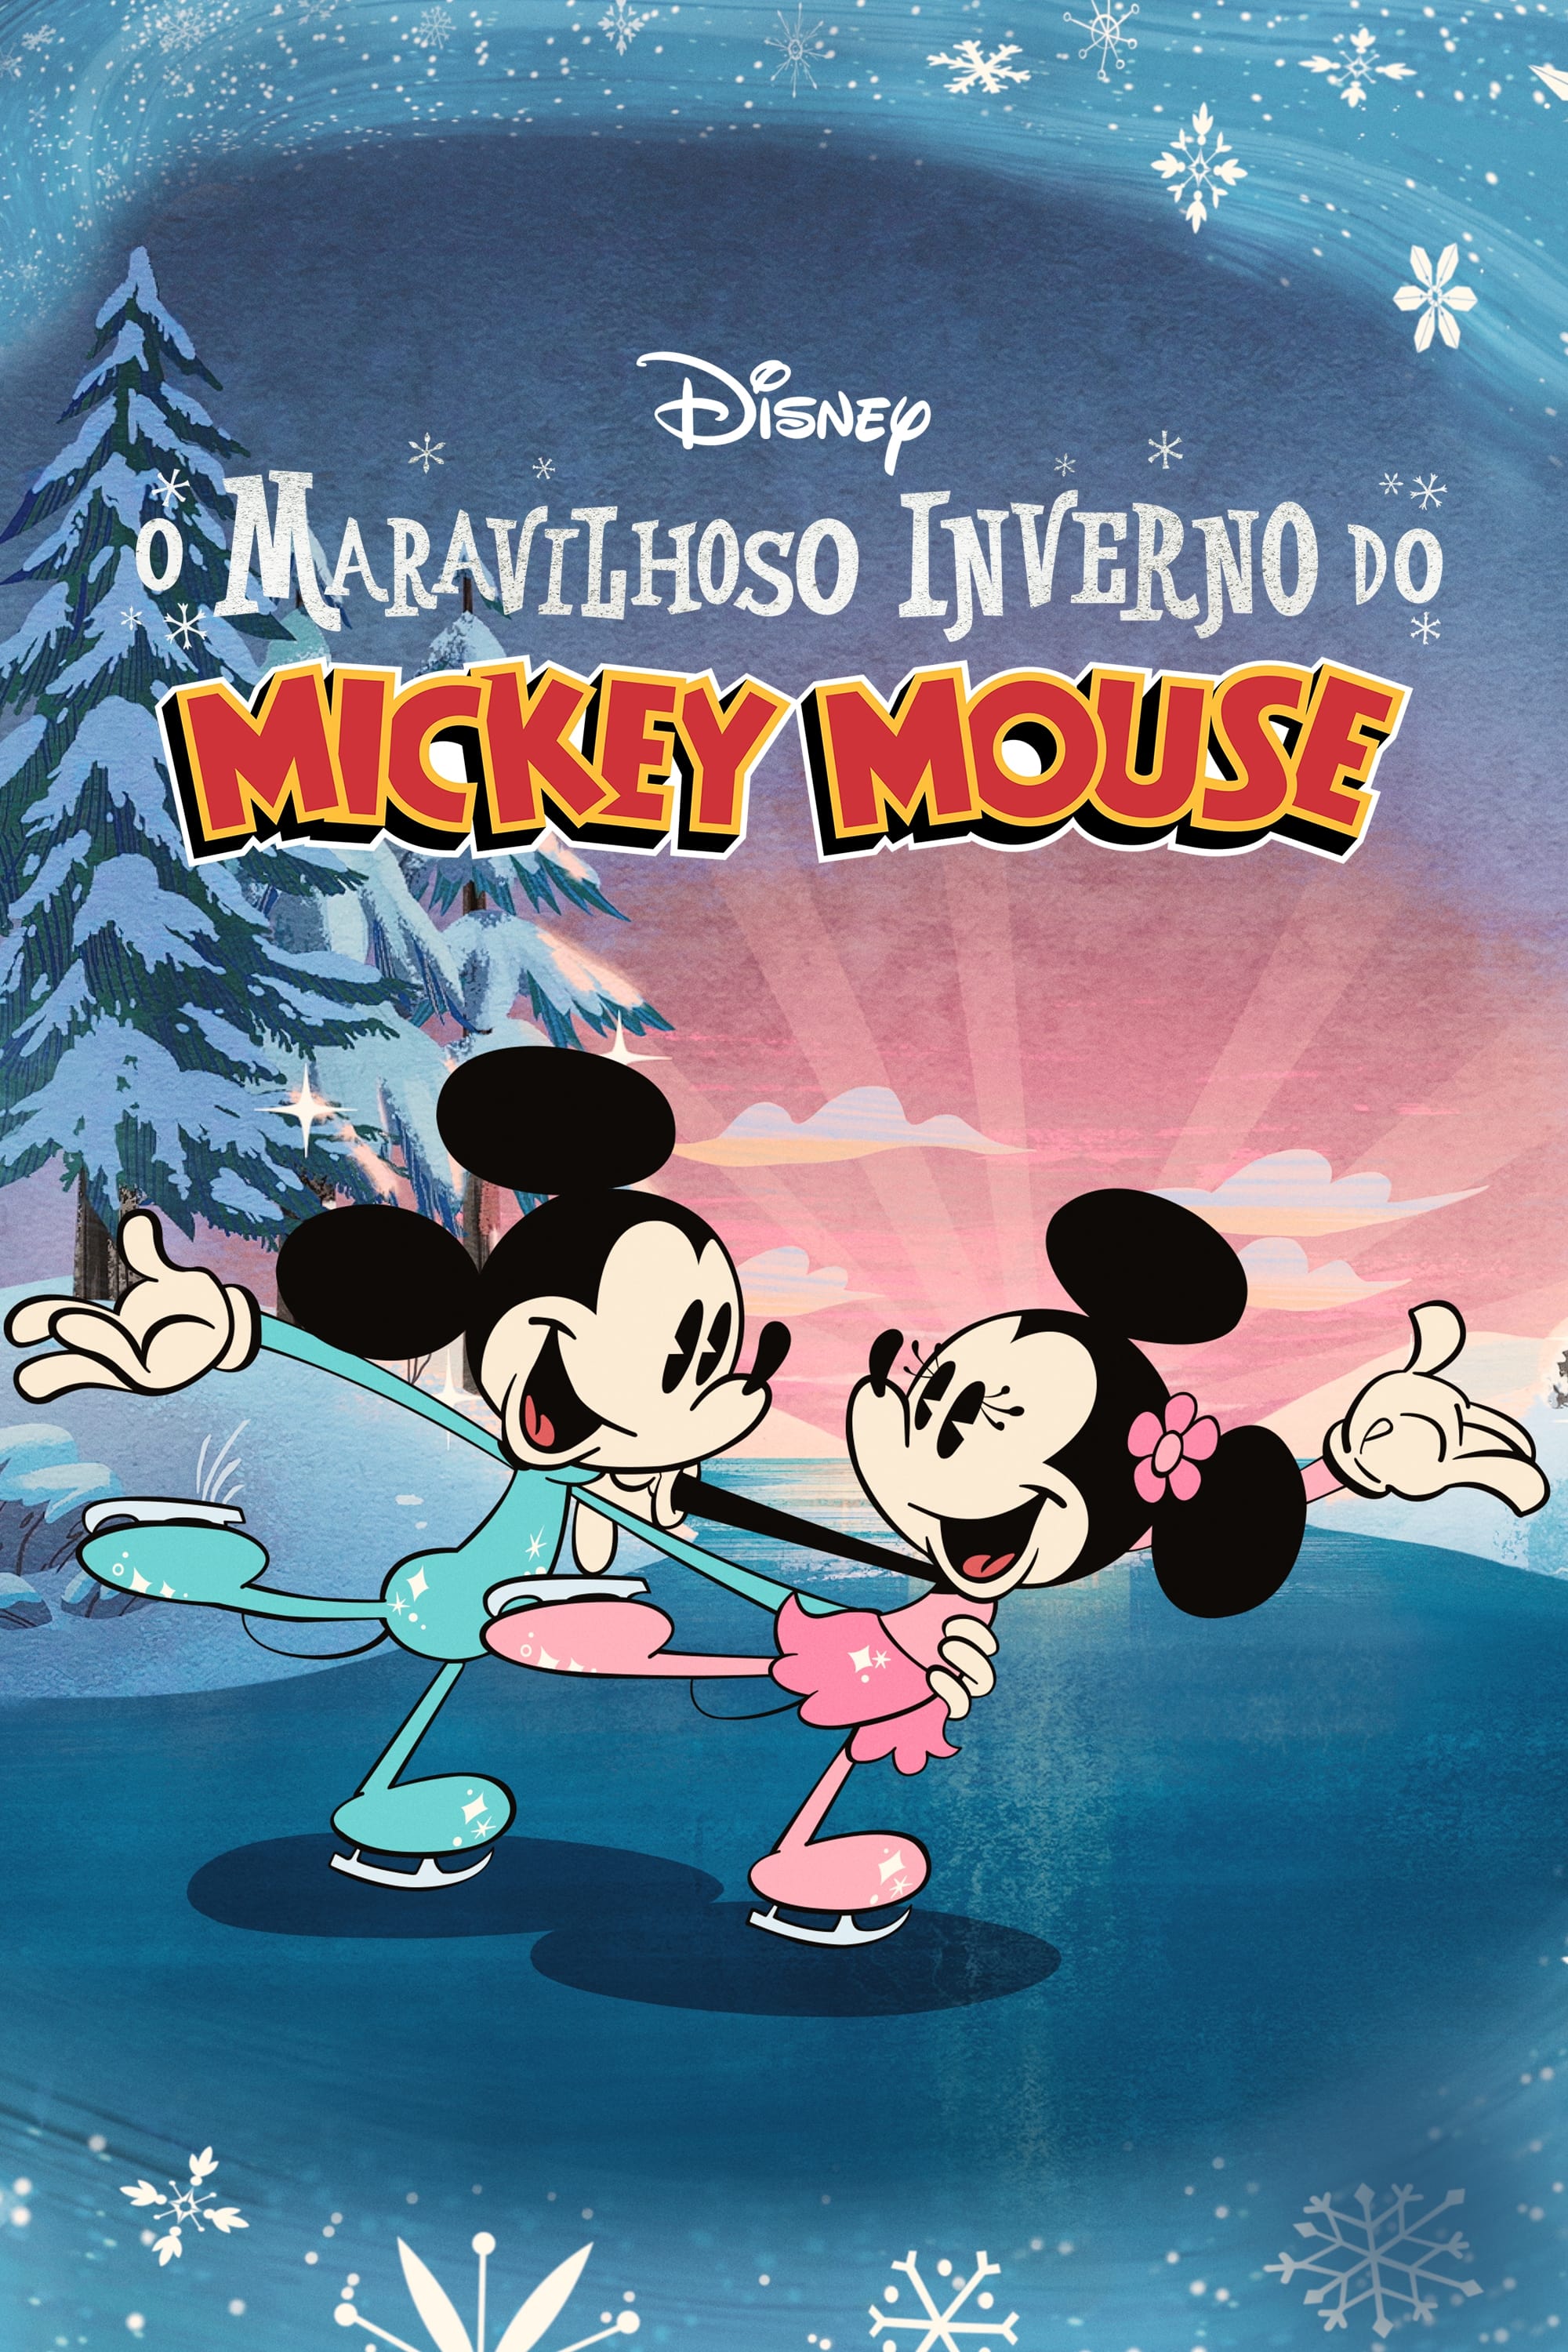 Dublador do Mickey Mouse! #dublagembr #dublagemhumortiktok